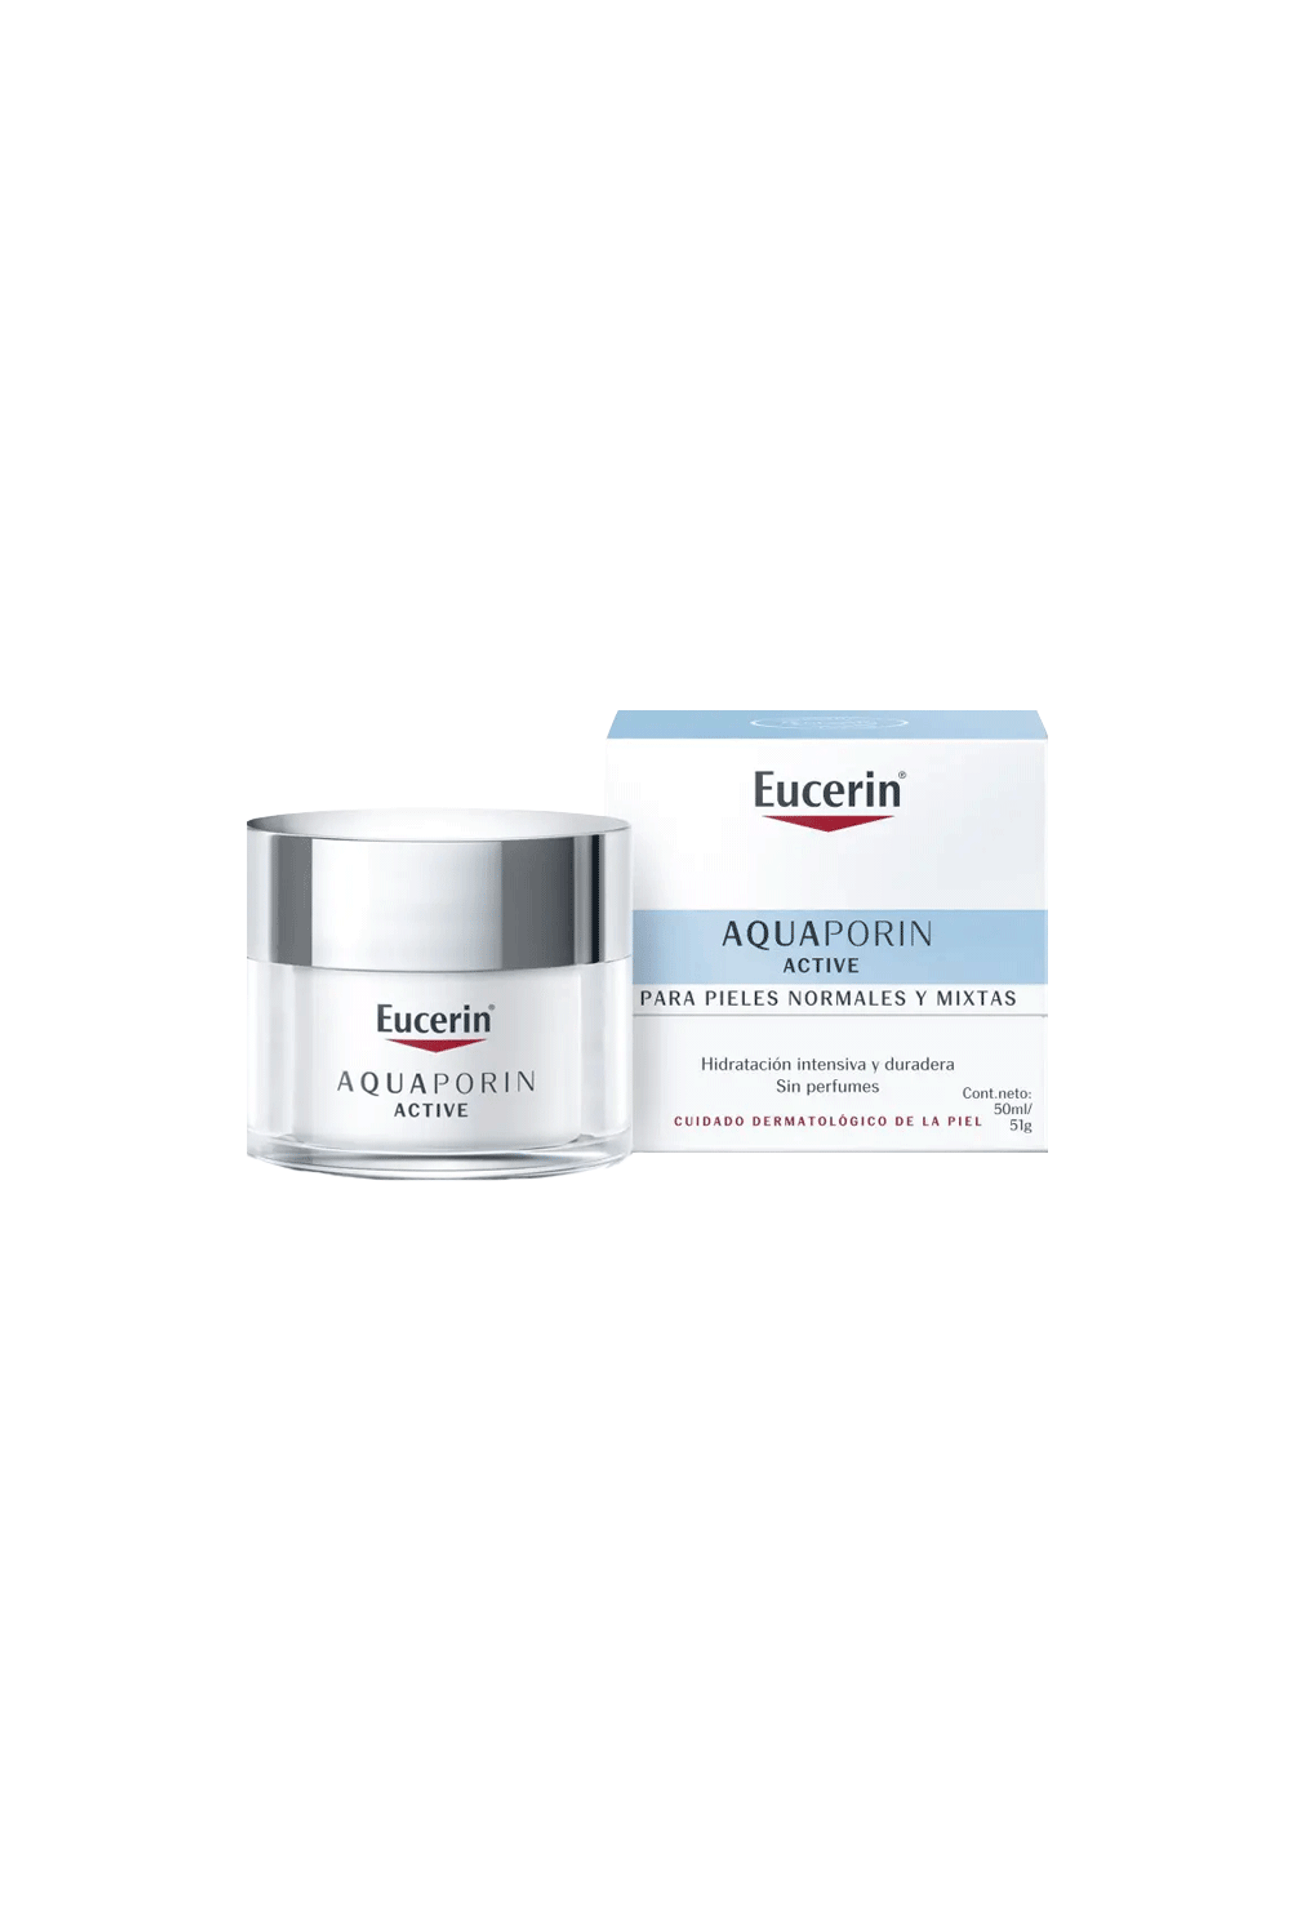 Eucerin-Crema-Facial-Eucerin-Aquaporin-Piel-Nromal-x-50-ml-4005800128608_img1